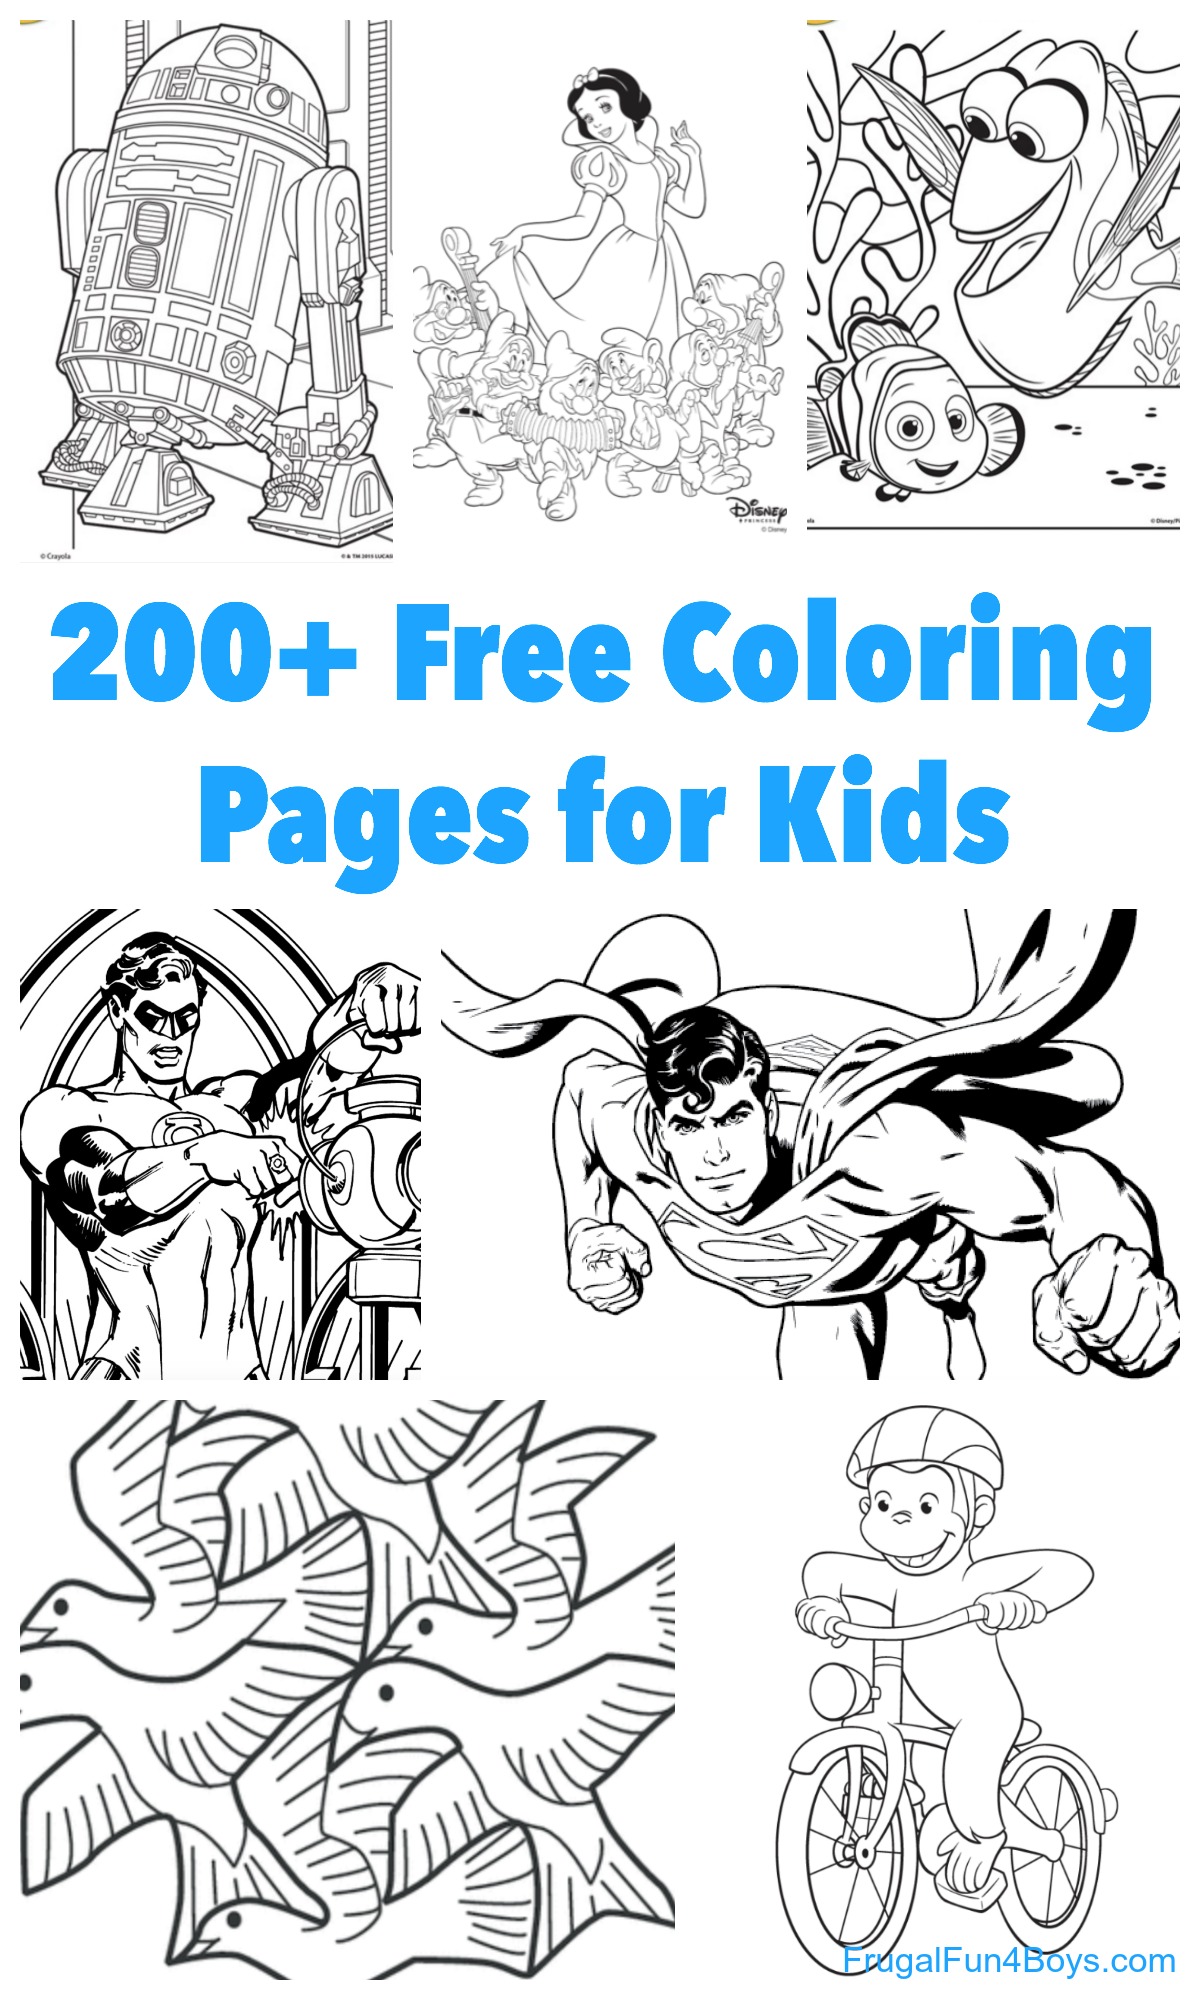 Free Printable Drawings For Kids at Explore